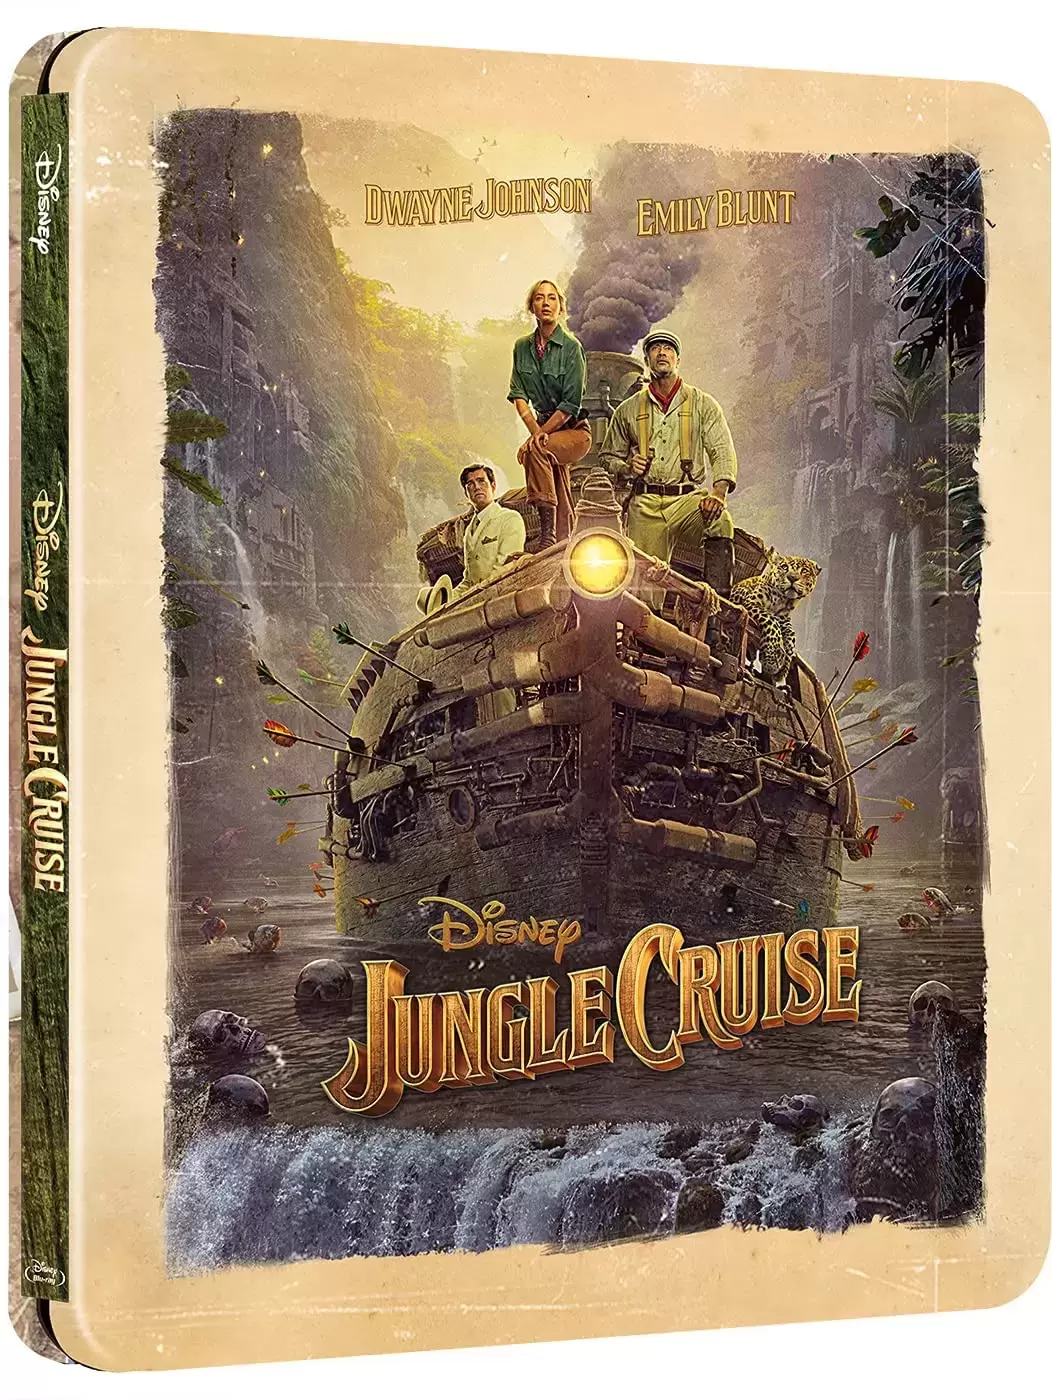 Blu-ray Steelbook - Jungle Cruise Steelbook 4K